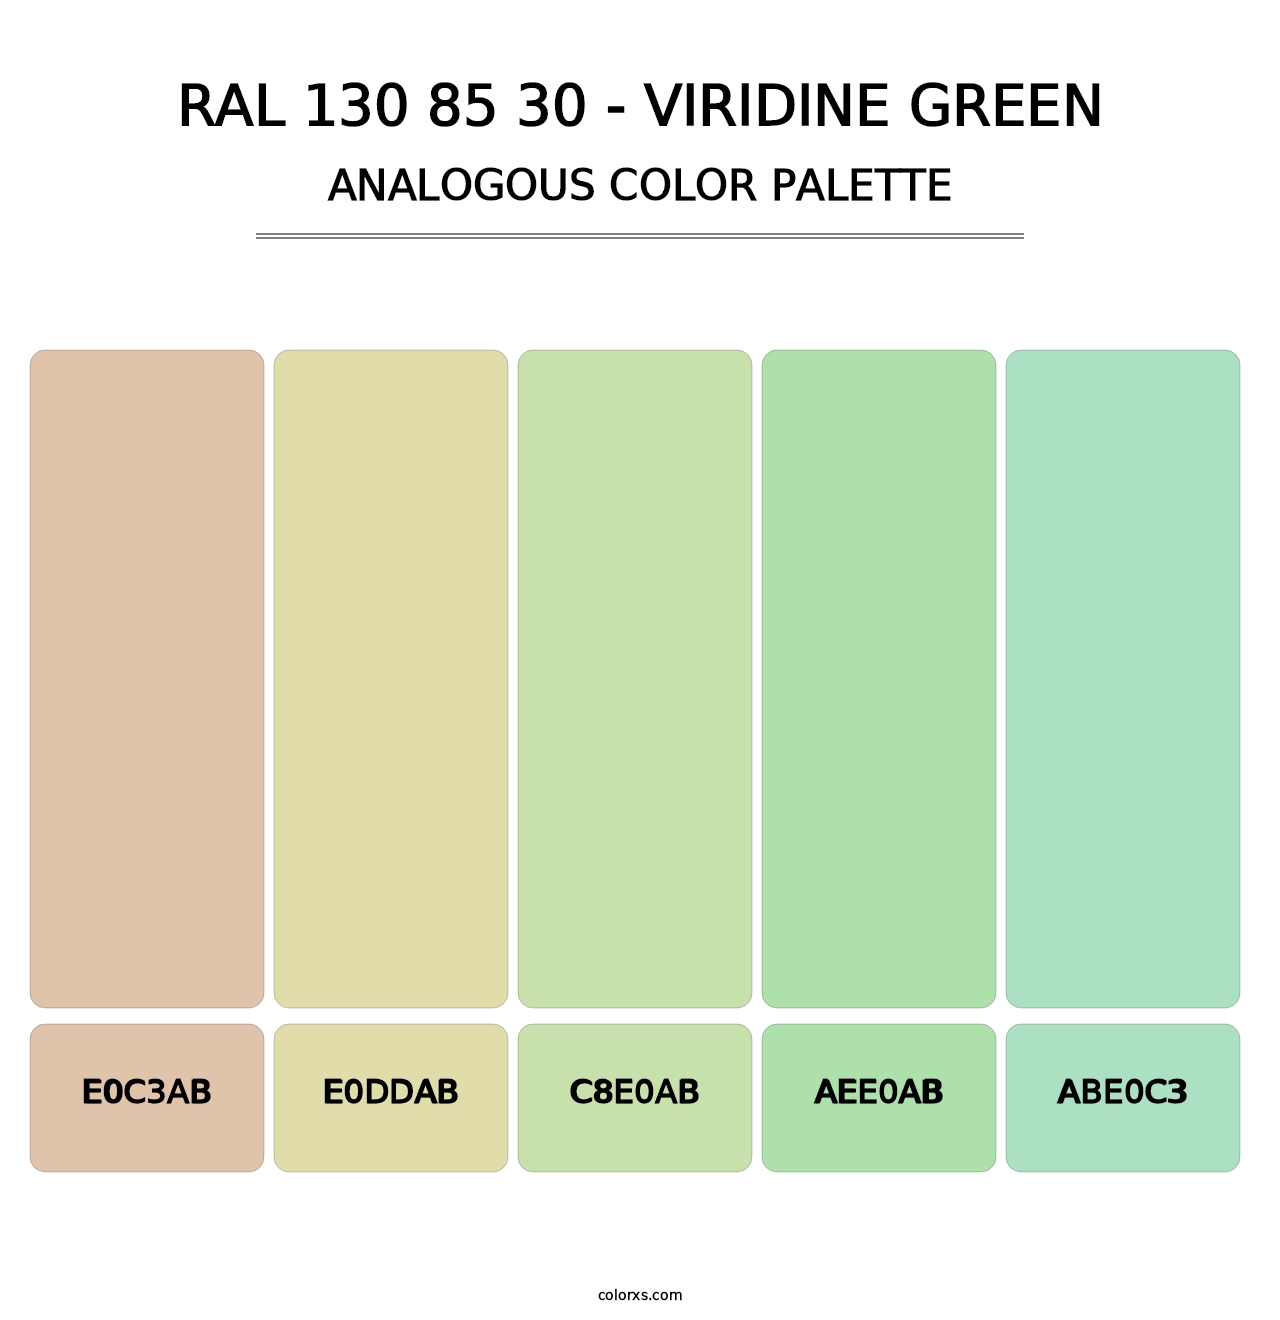 RAL 130 85 30 - Viridine Green - Analogous Color Palette